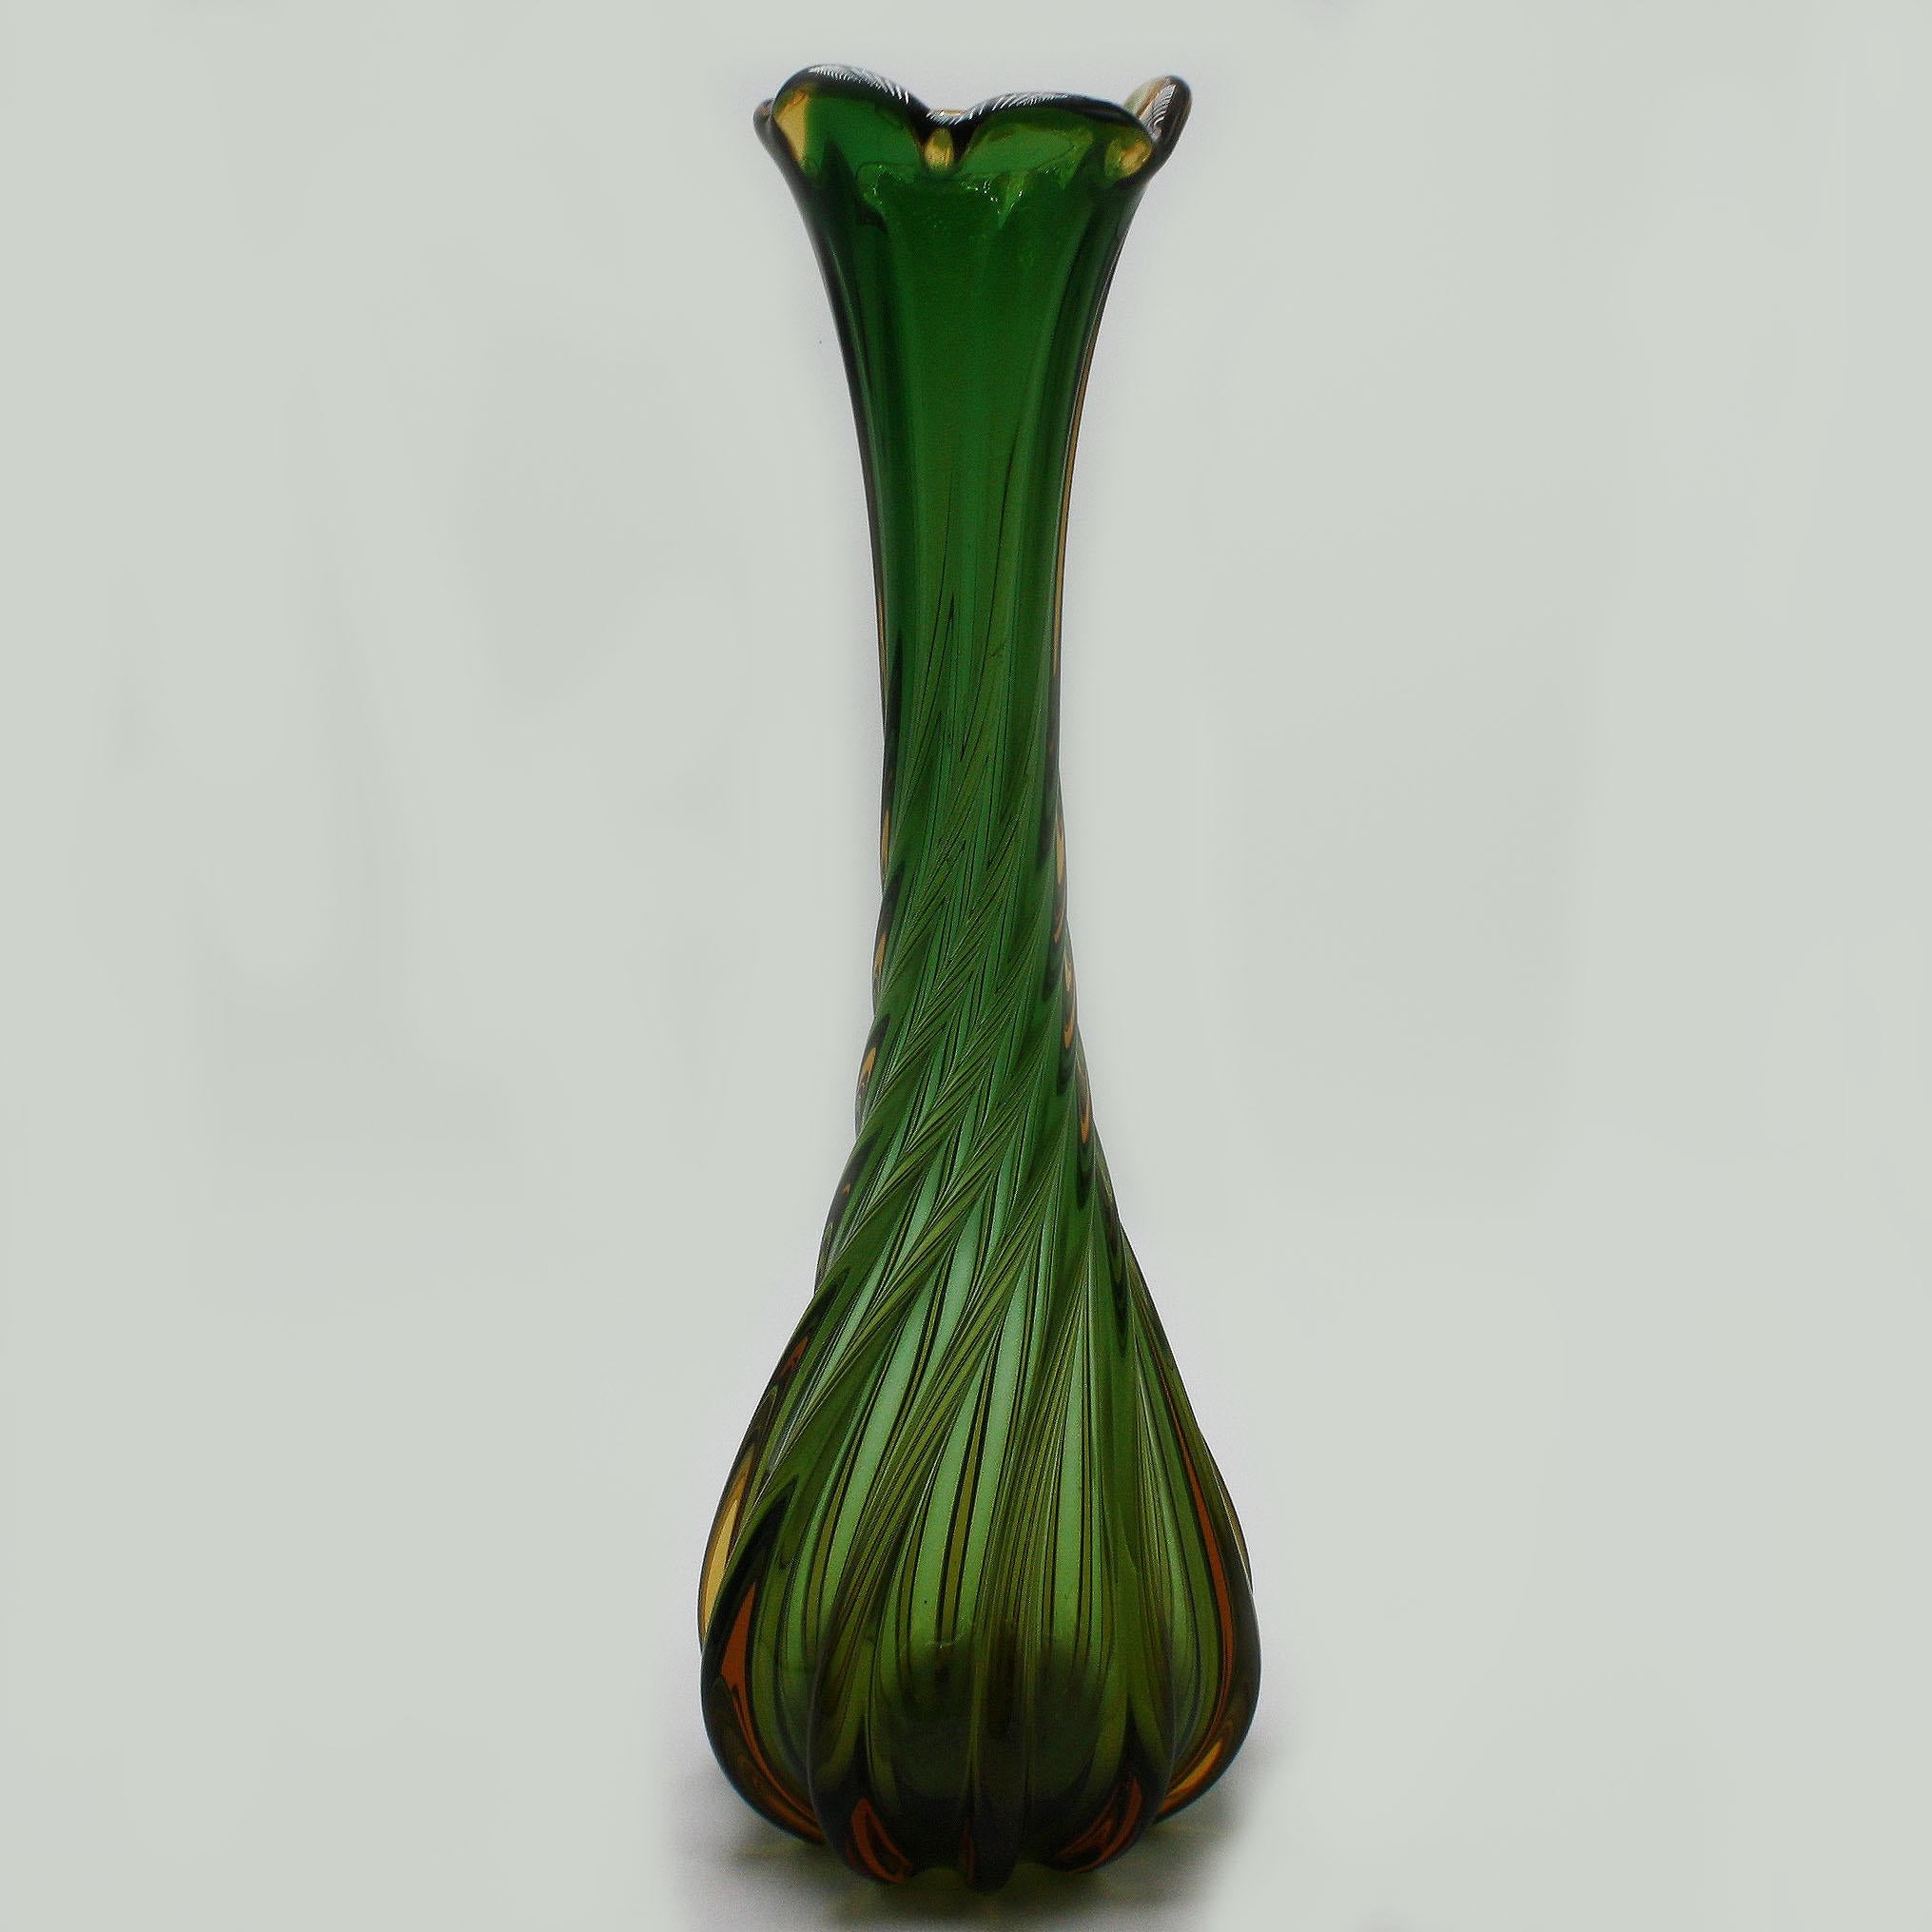 Green twisted Murano glass vase, circa 1960
Measures: 6” diameter x 16 1/2” height.